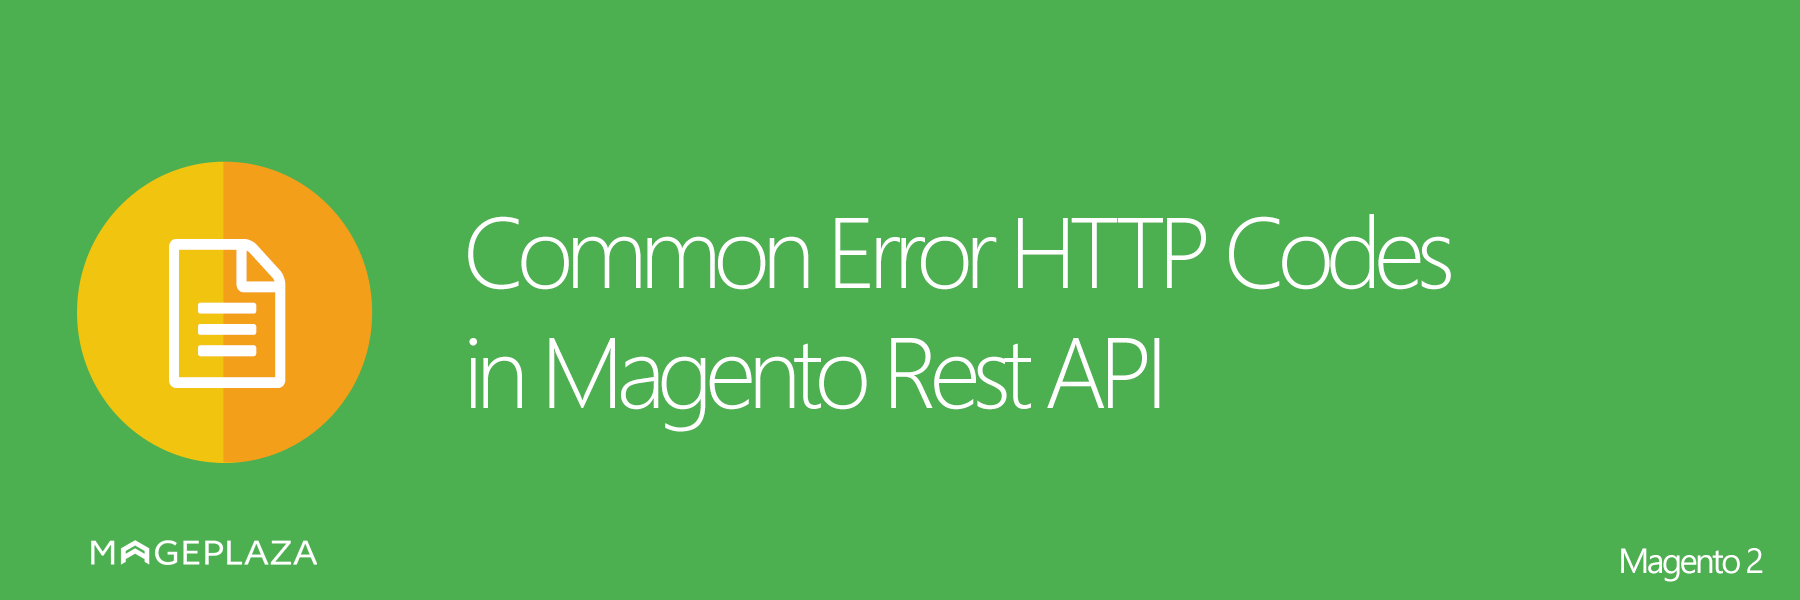 Common Error HTTP Codes in Magento Rest API